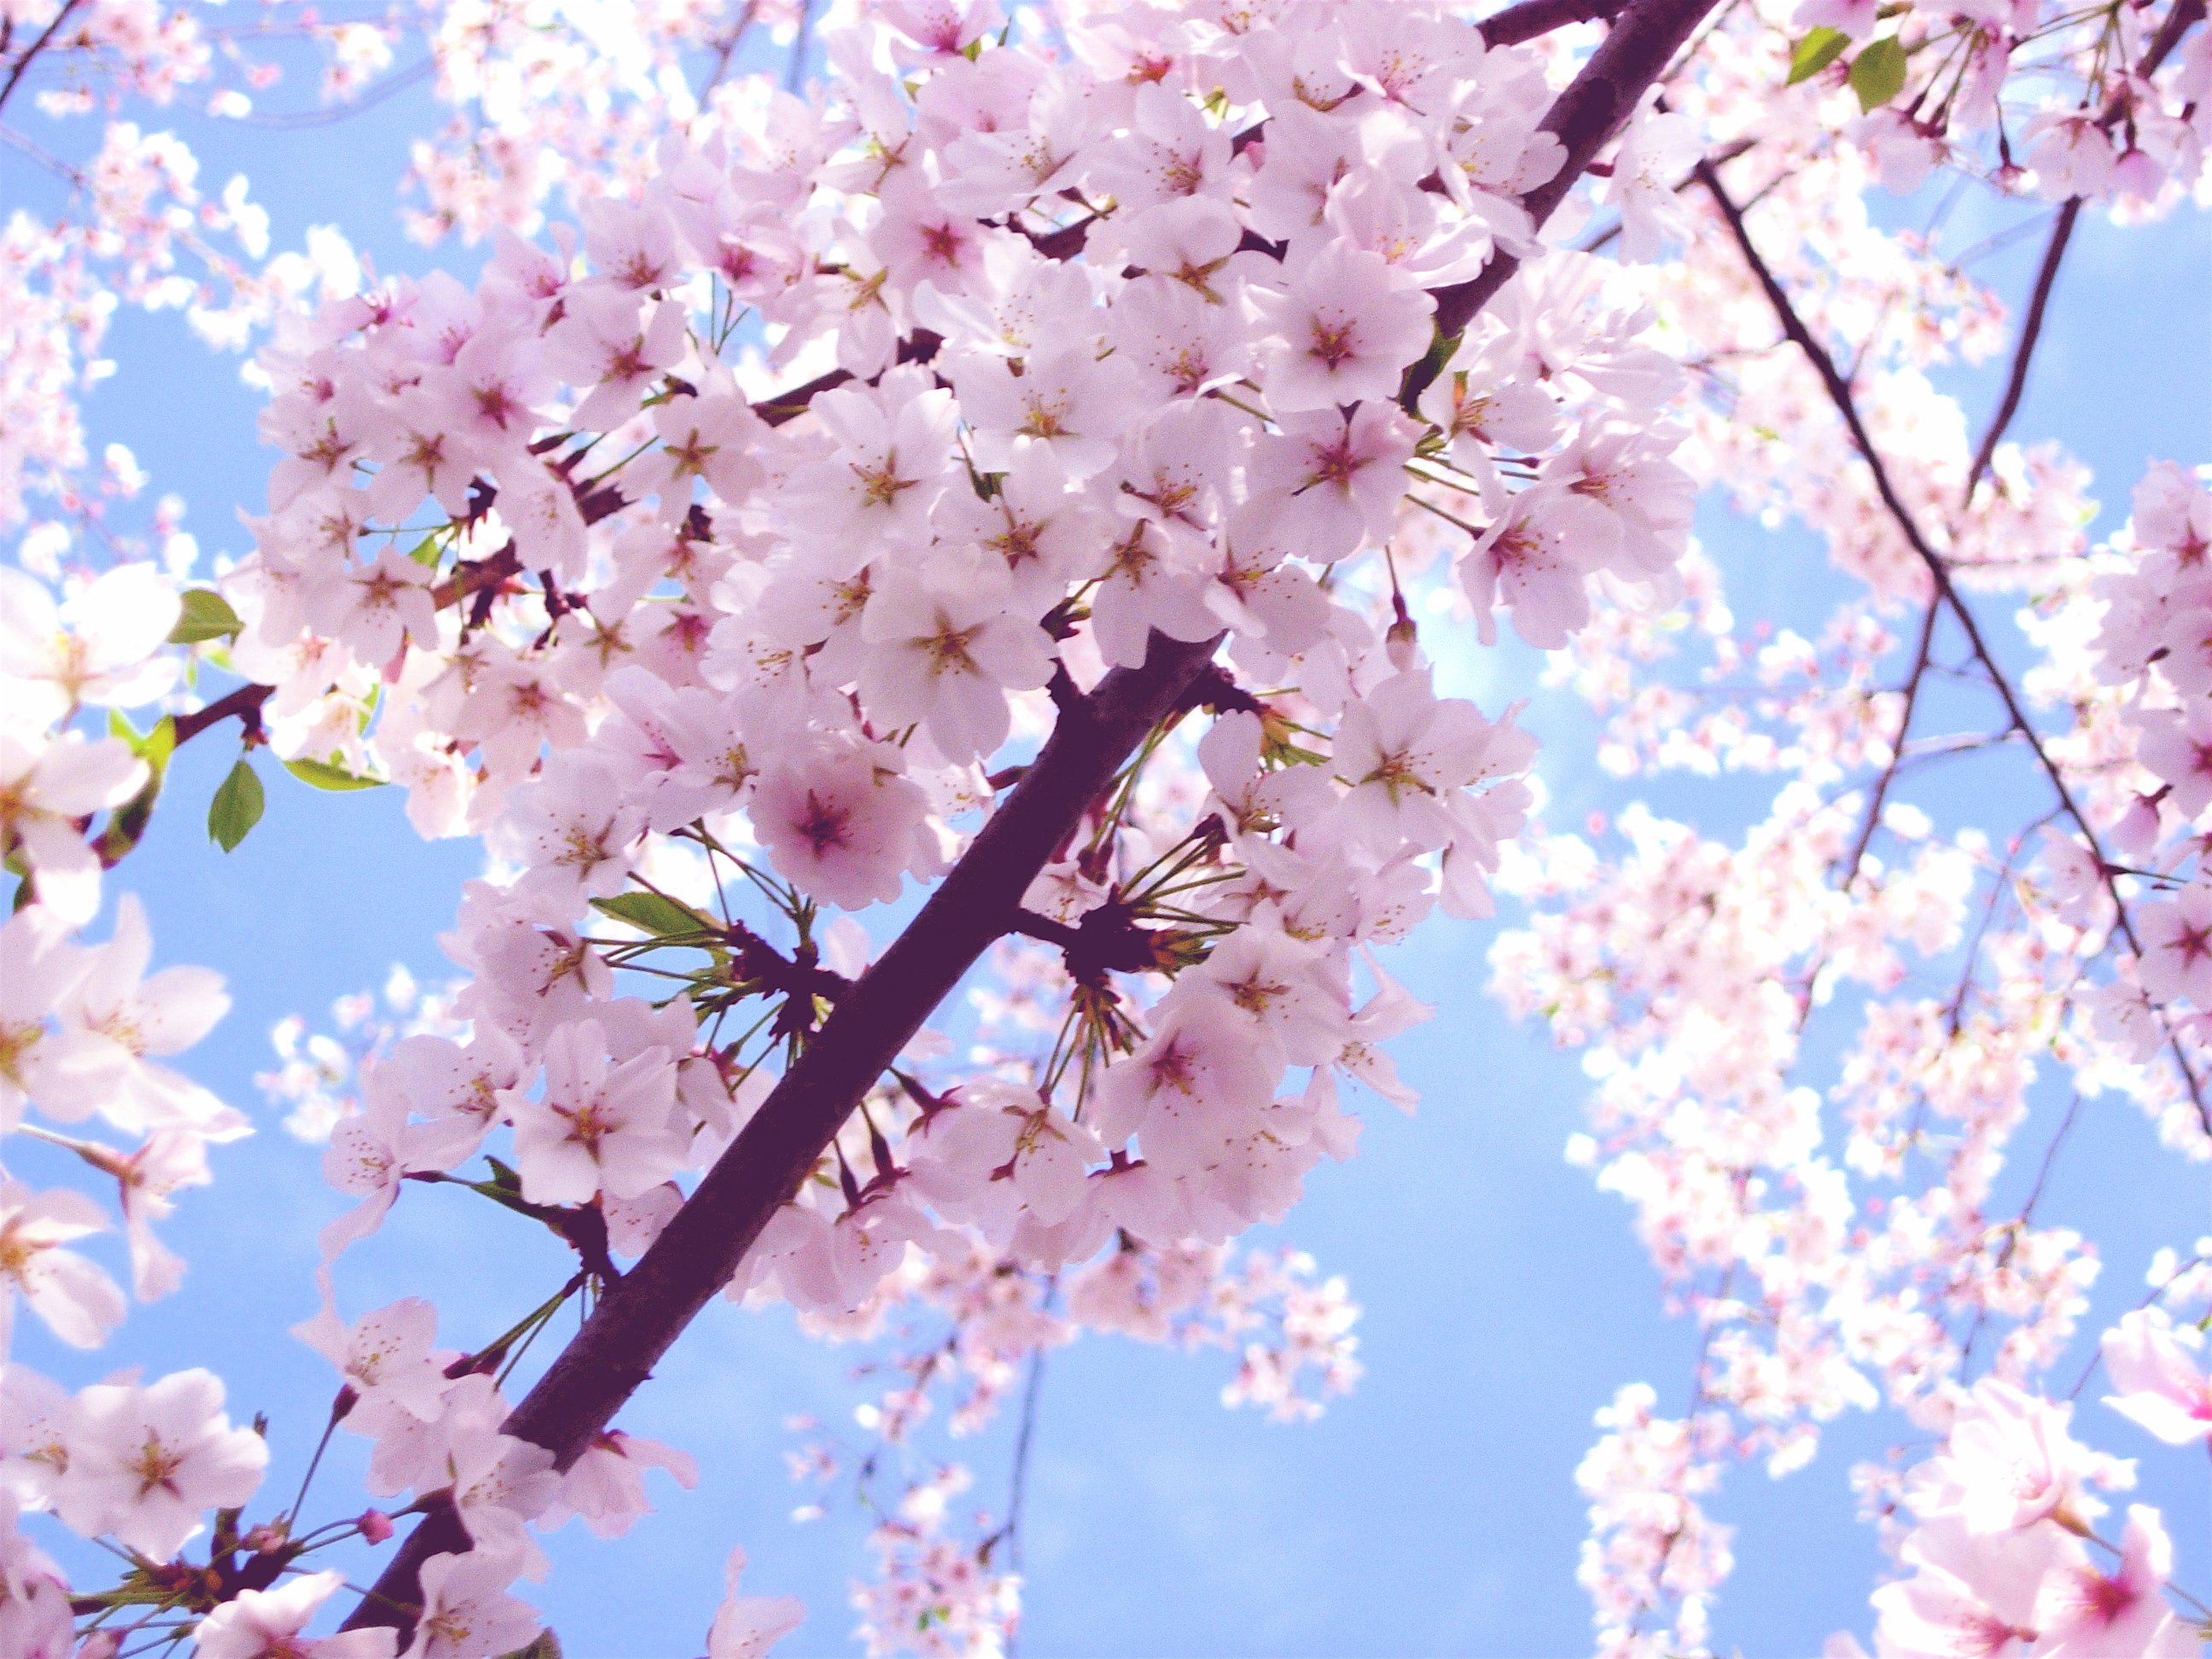 Pink Cherry Blossom